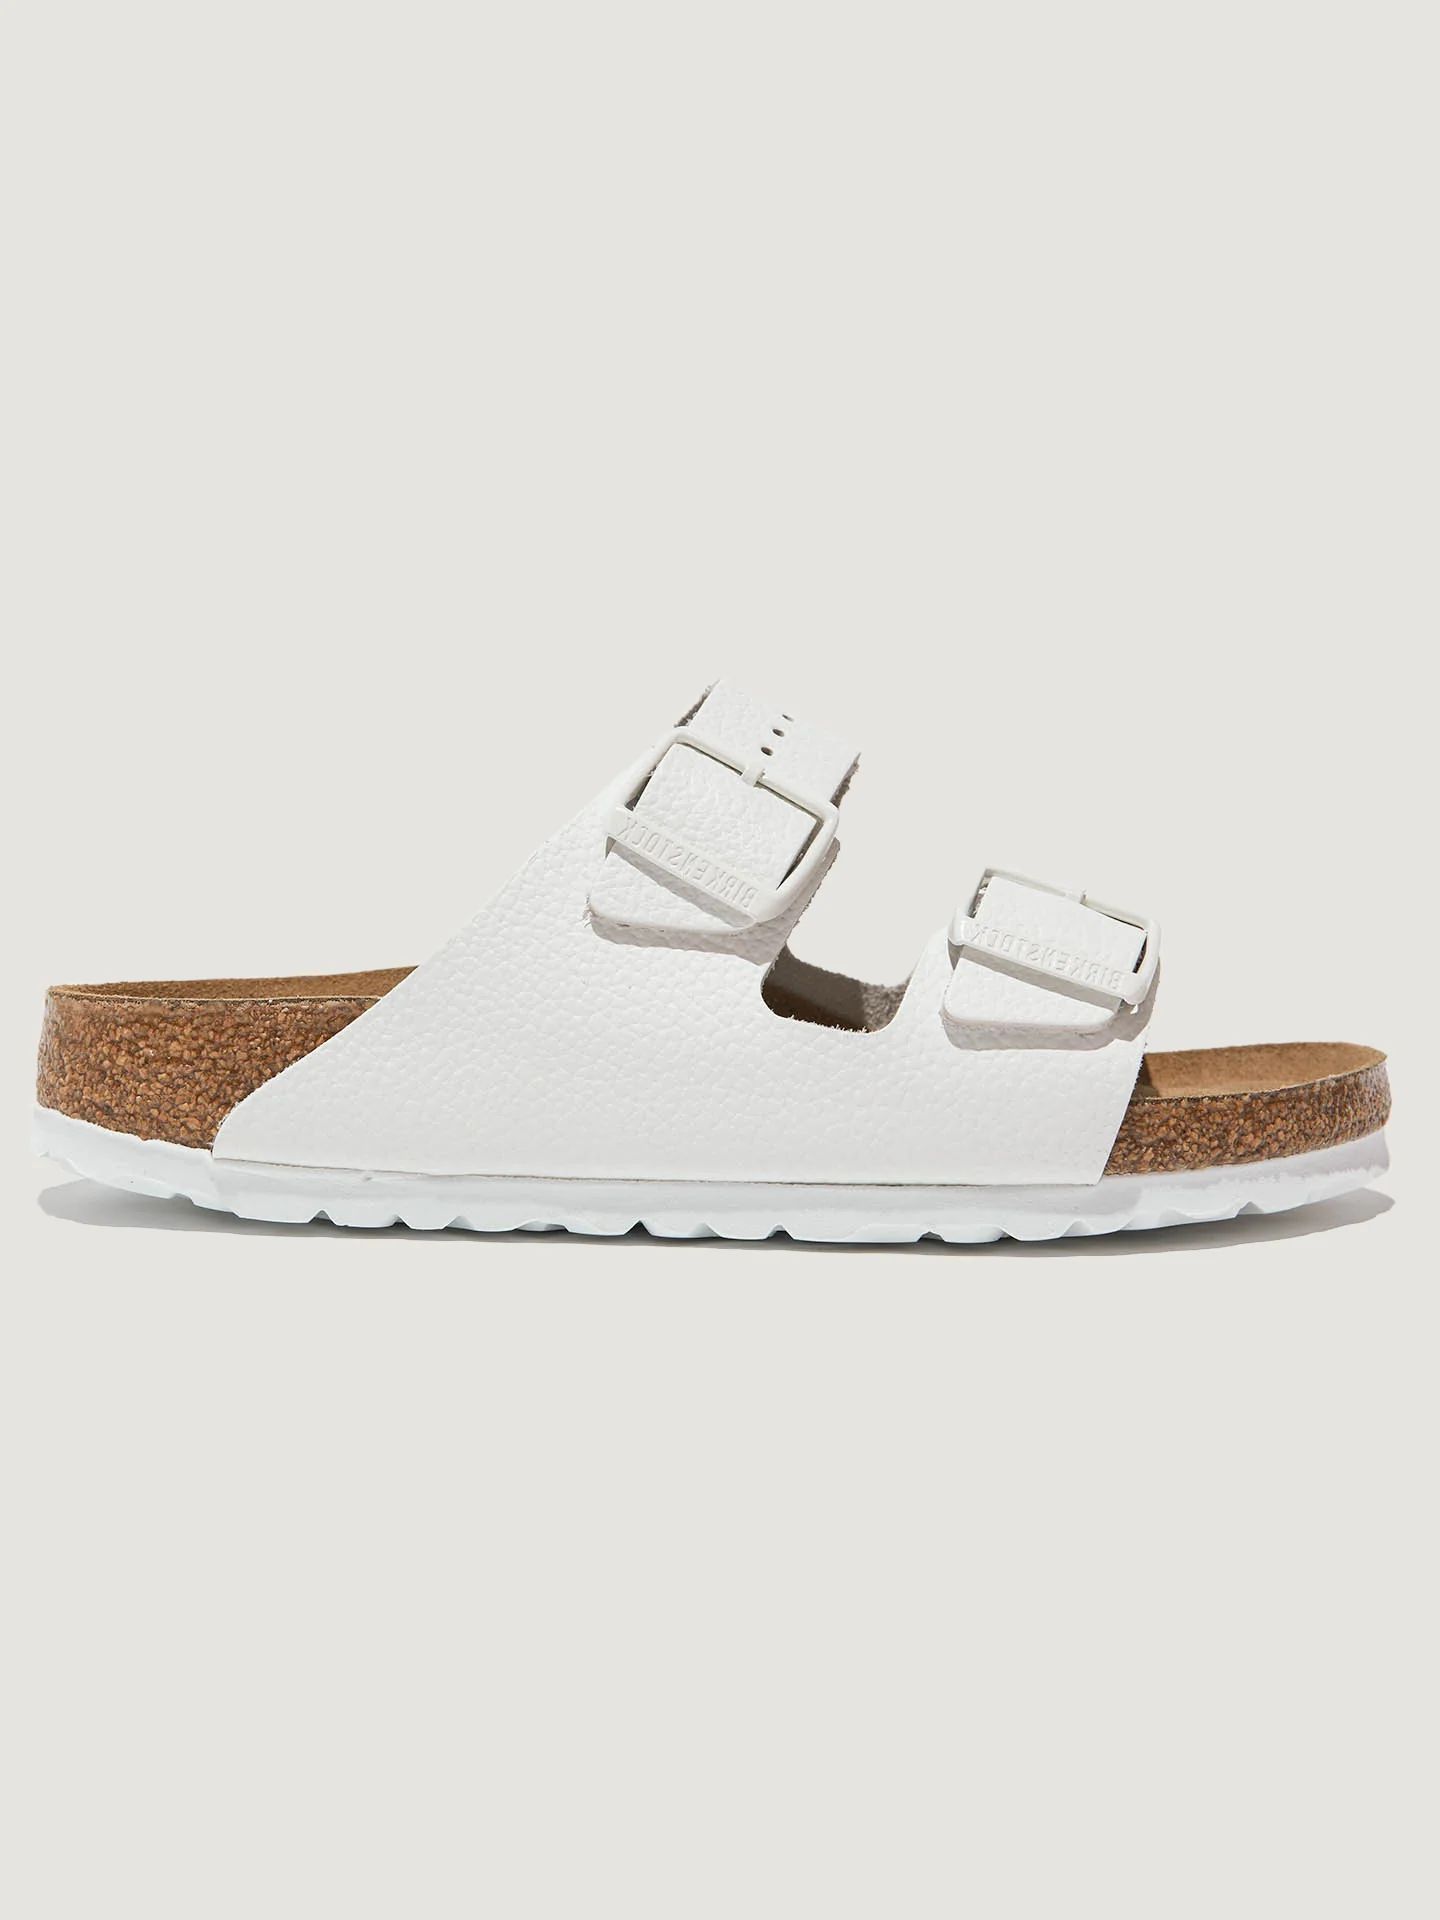 Arizona Soft Footbed - Leather/ White | Carbon38